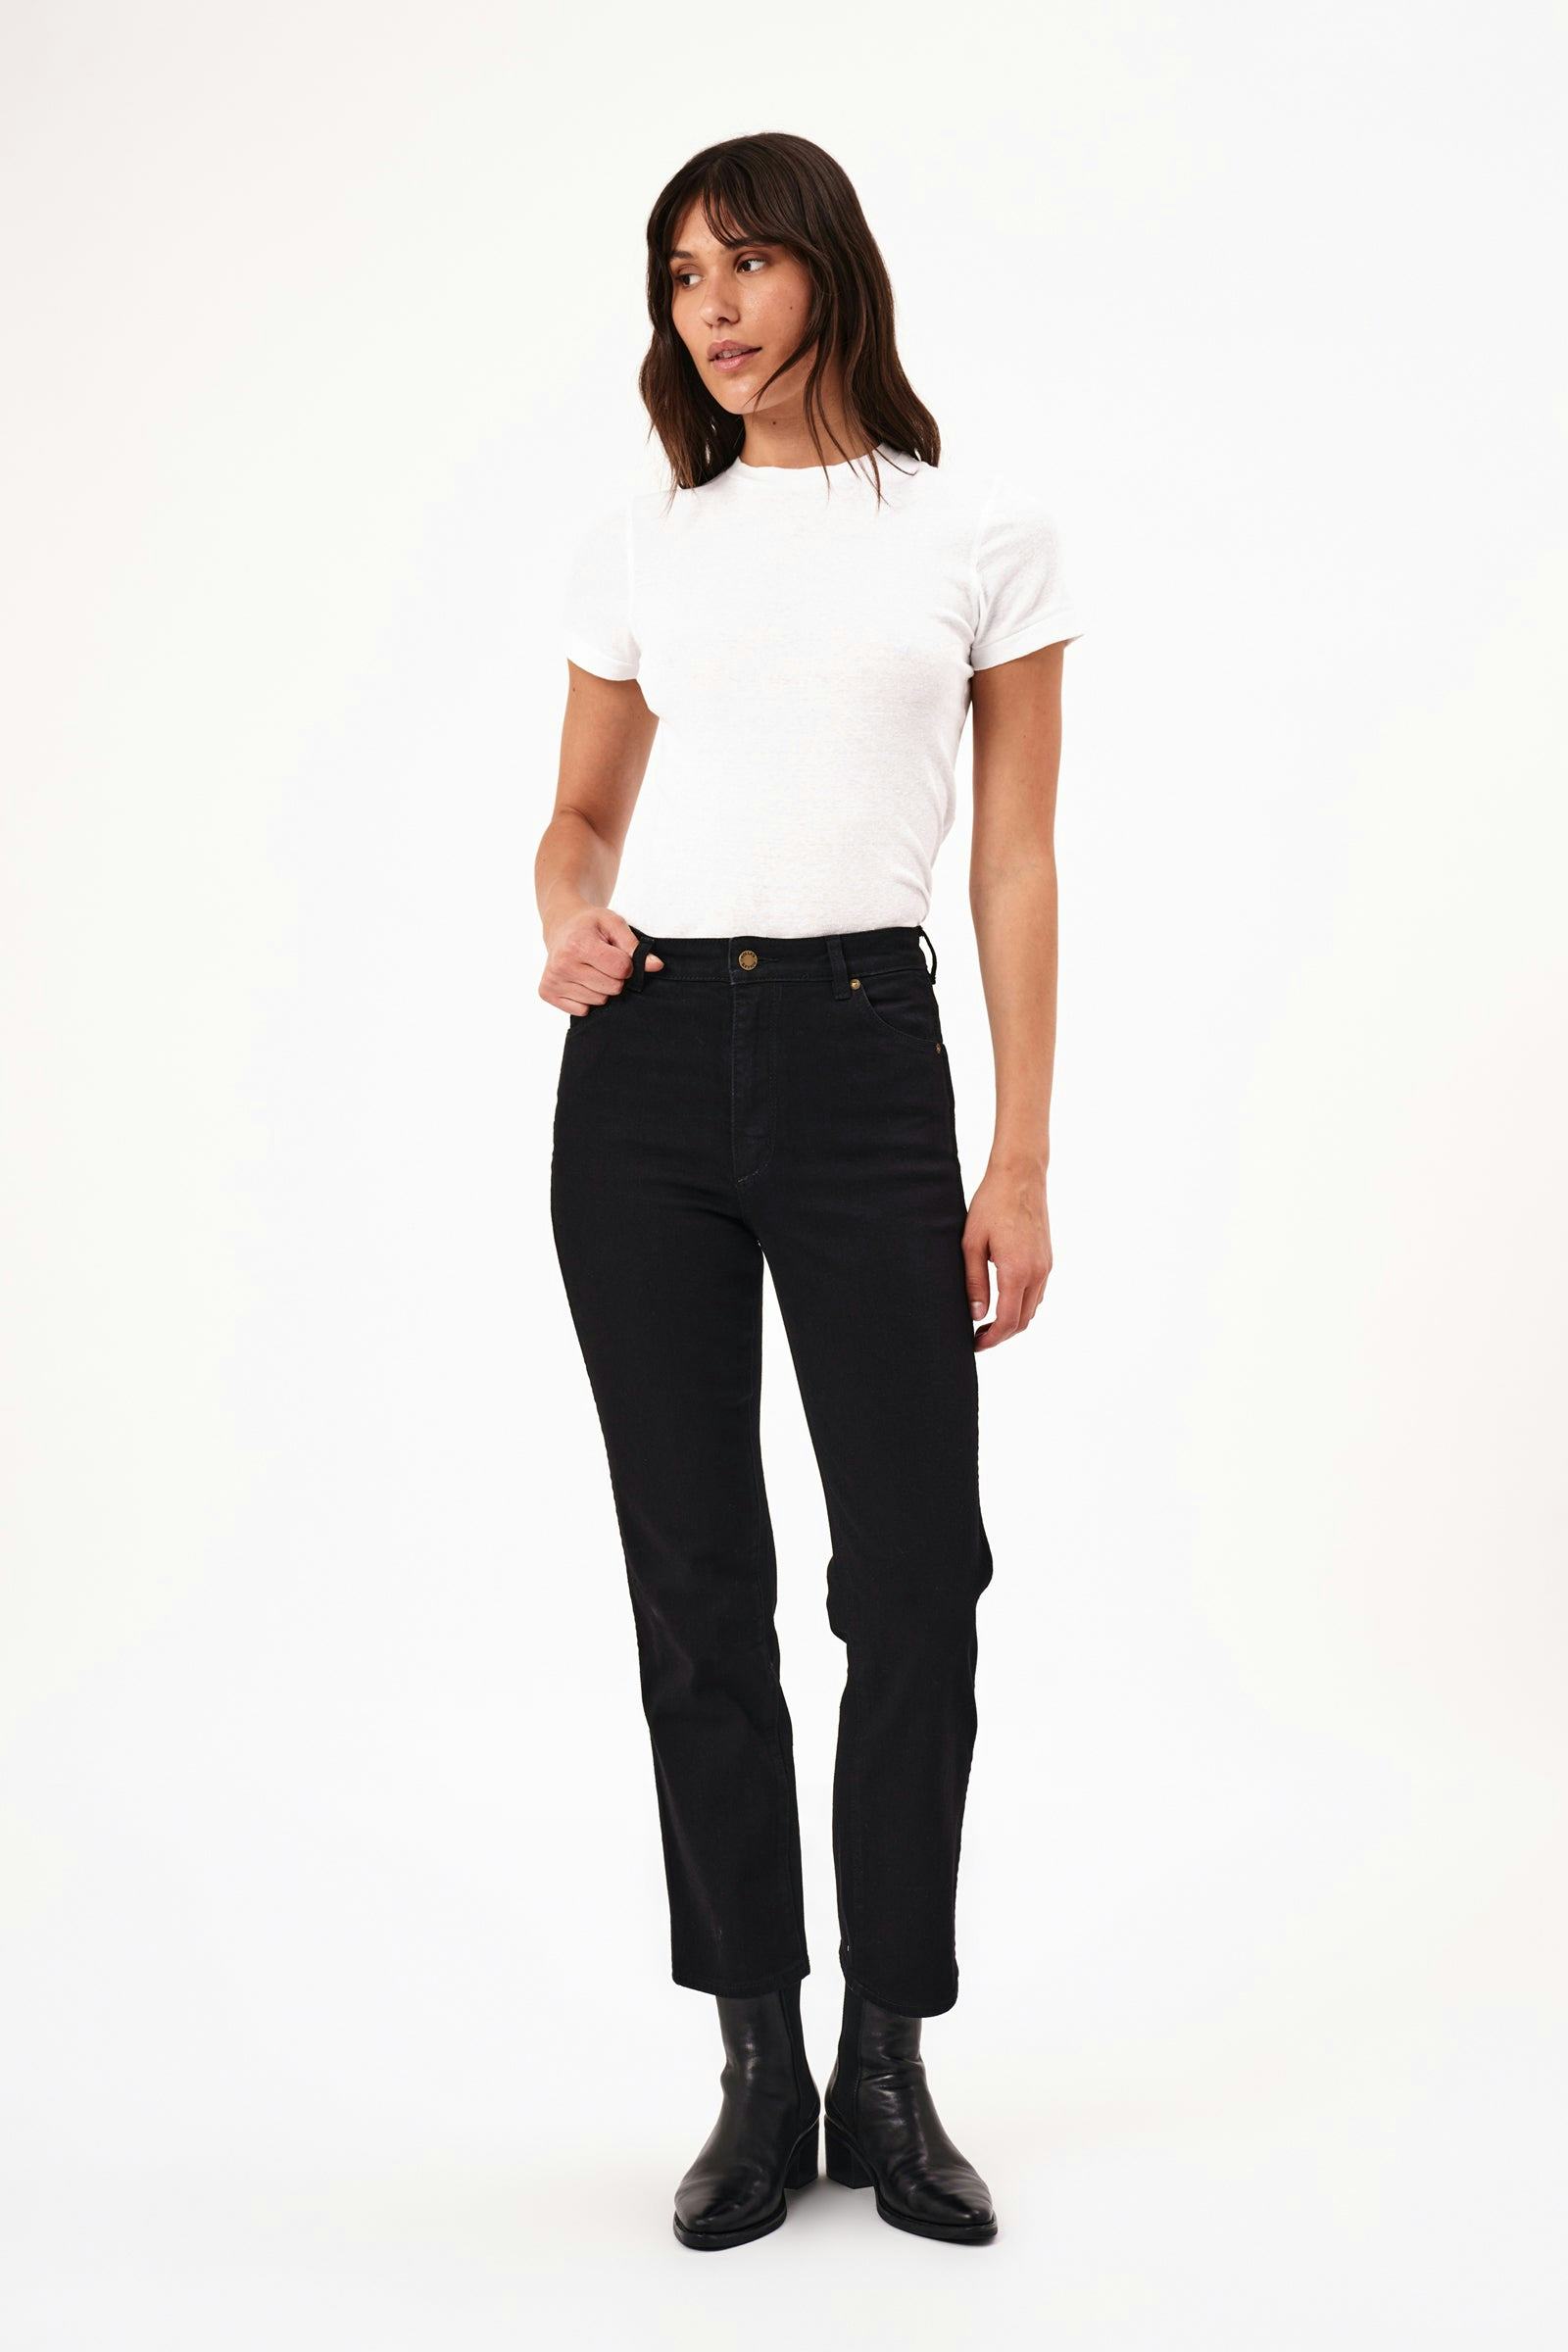 Buy Original Straight - Rinse Black Online | Rollas Jeans